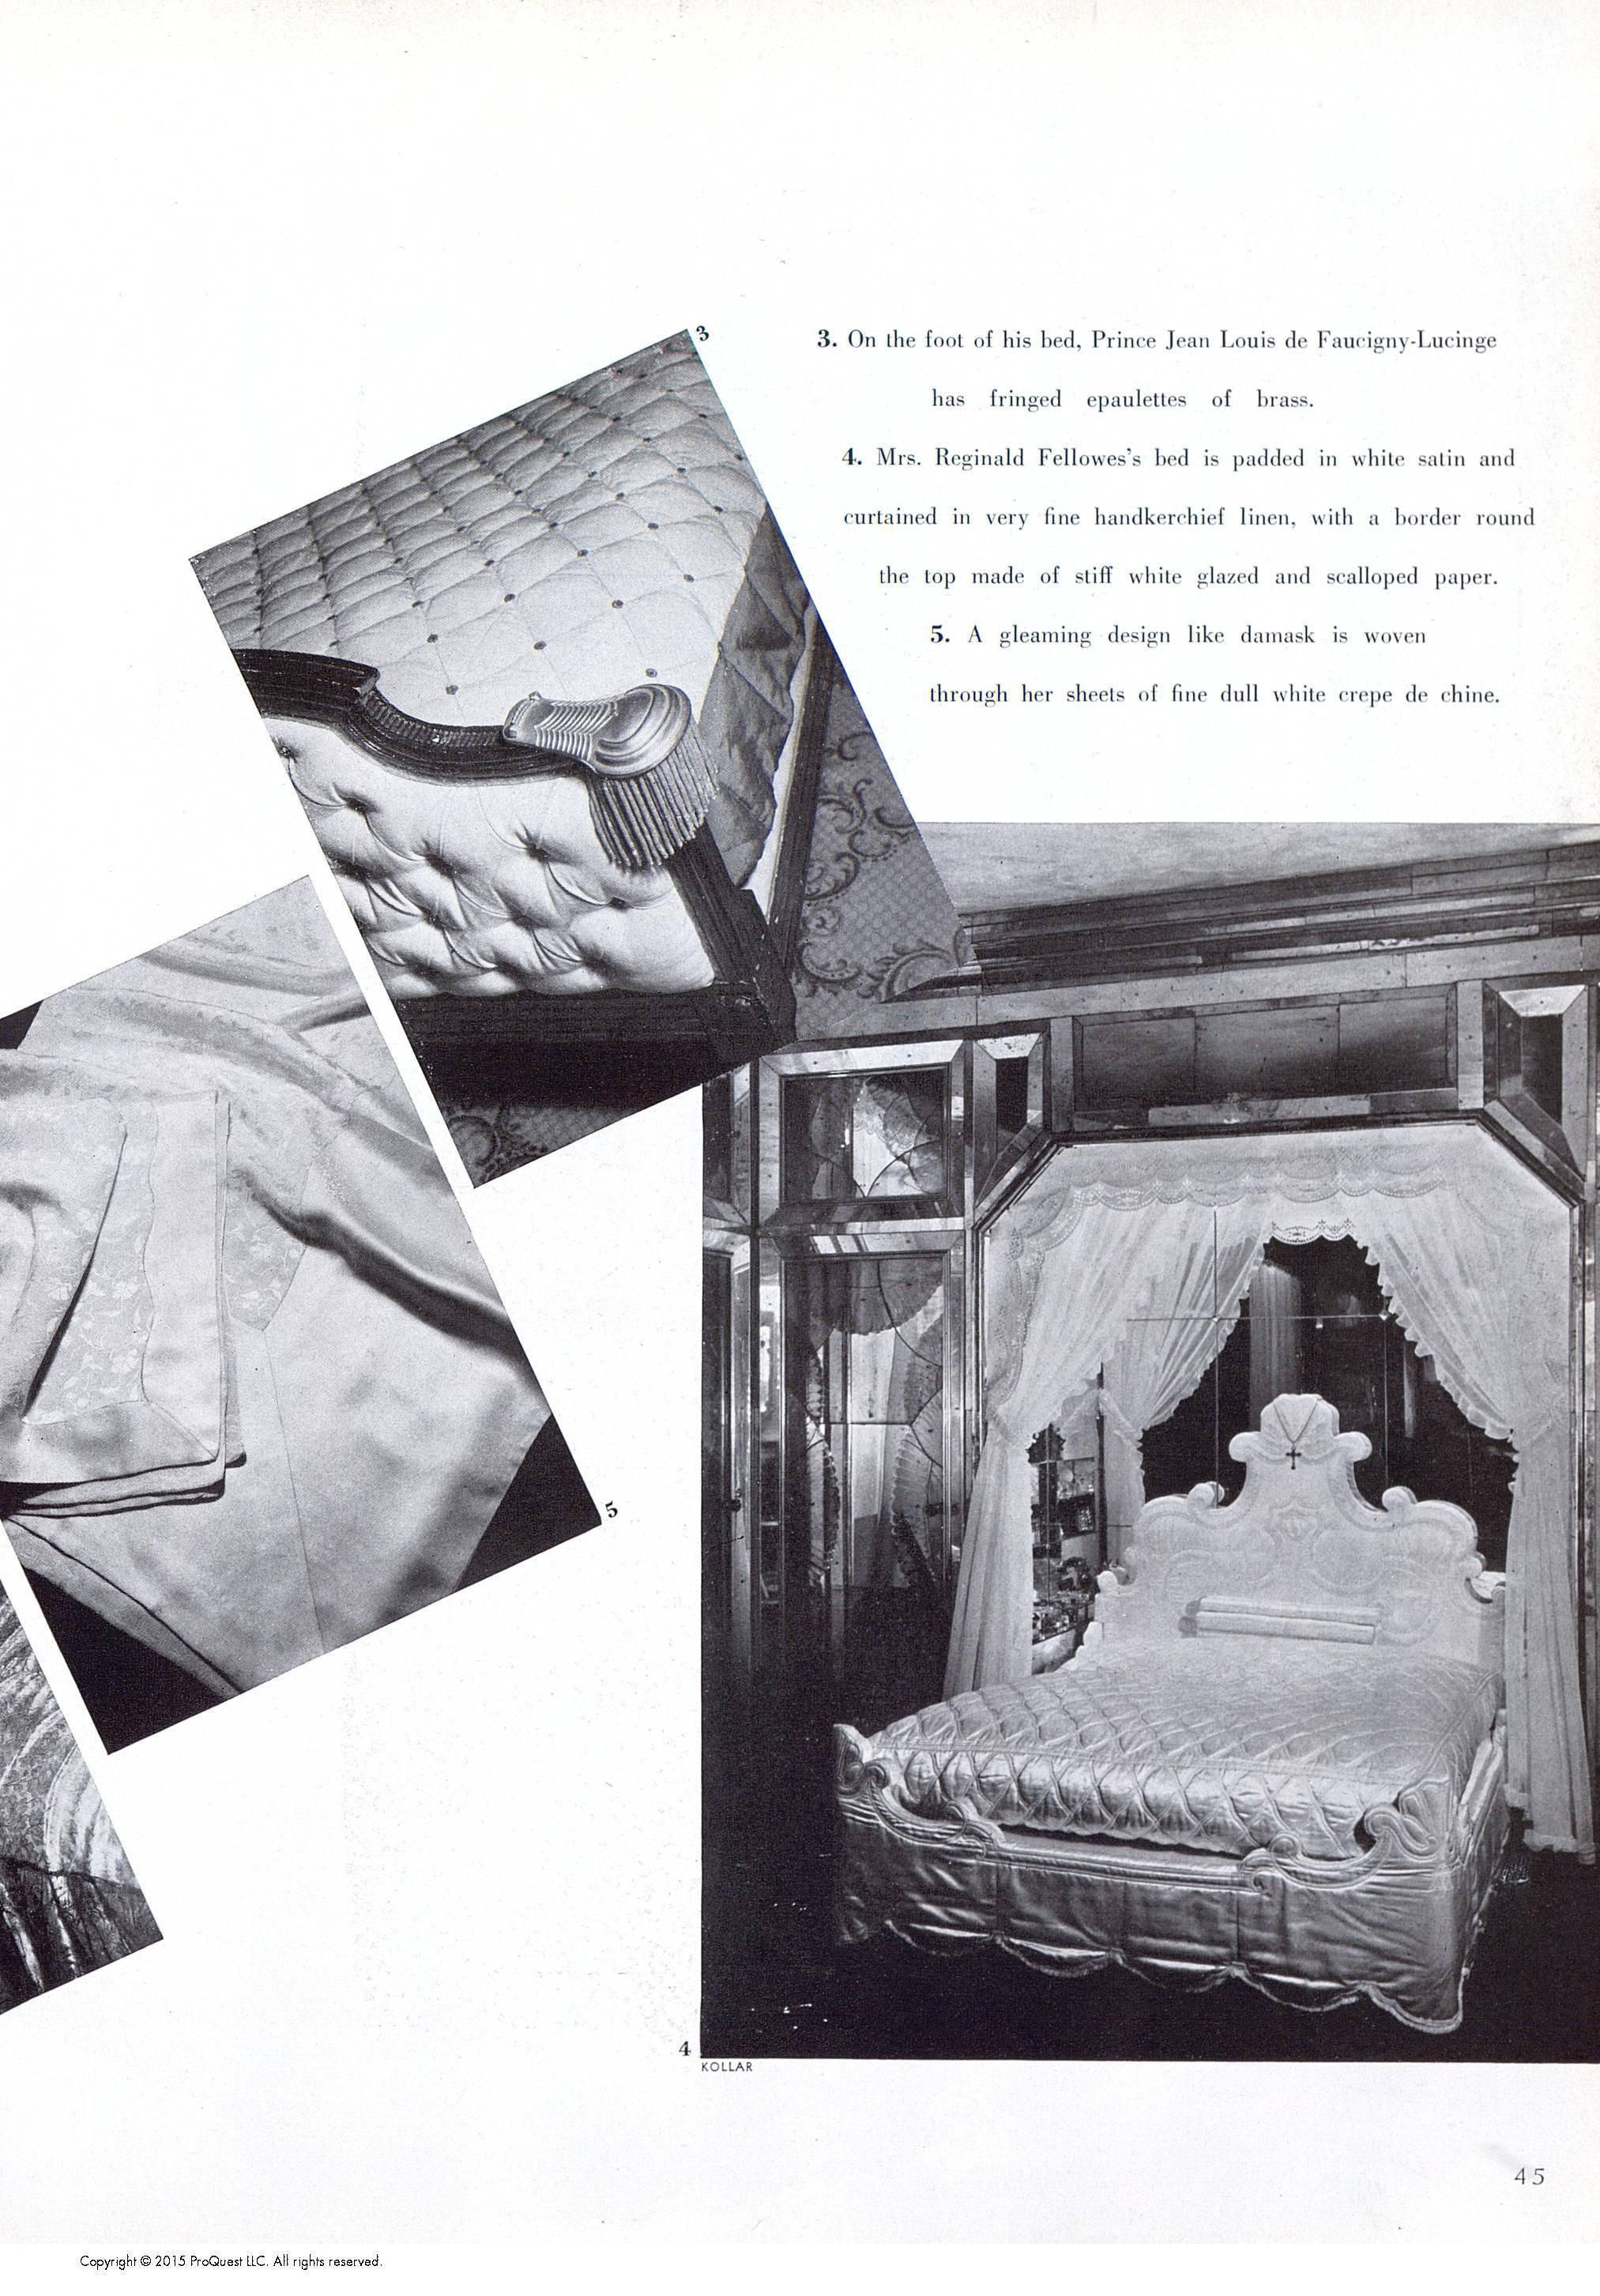 Modern 1938 Francois Kollar Photograph of the Bedroom of Daisy Fellowes